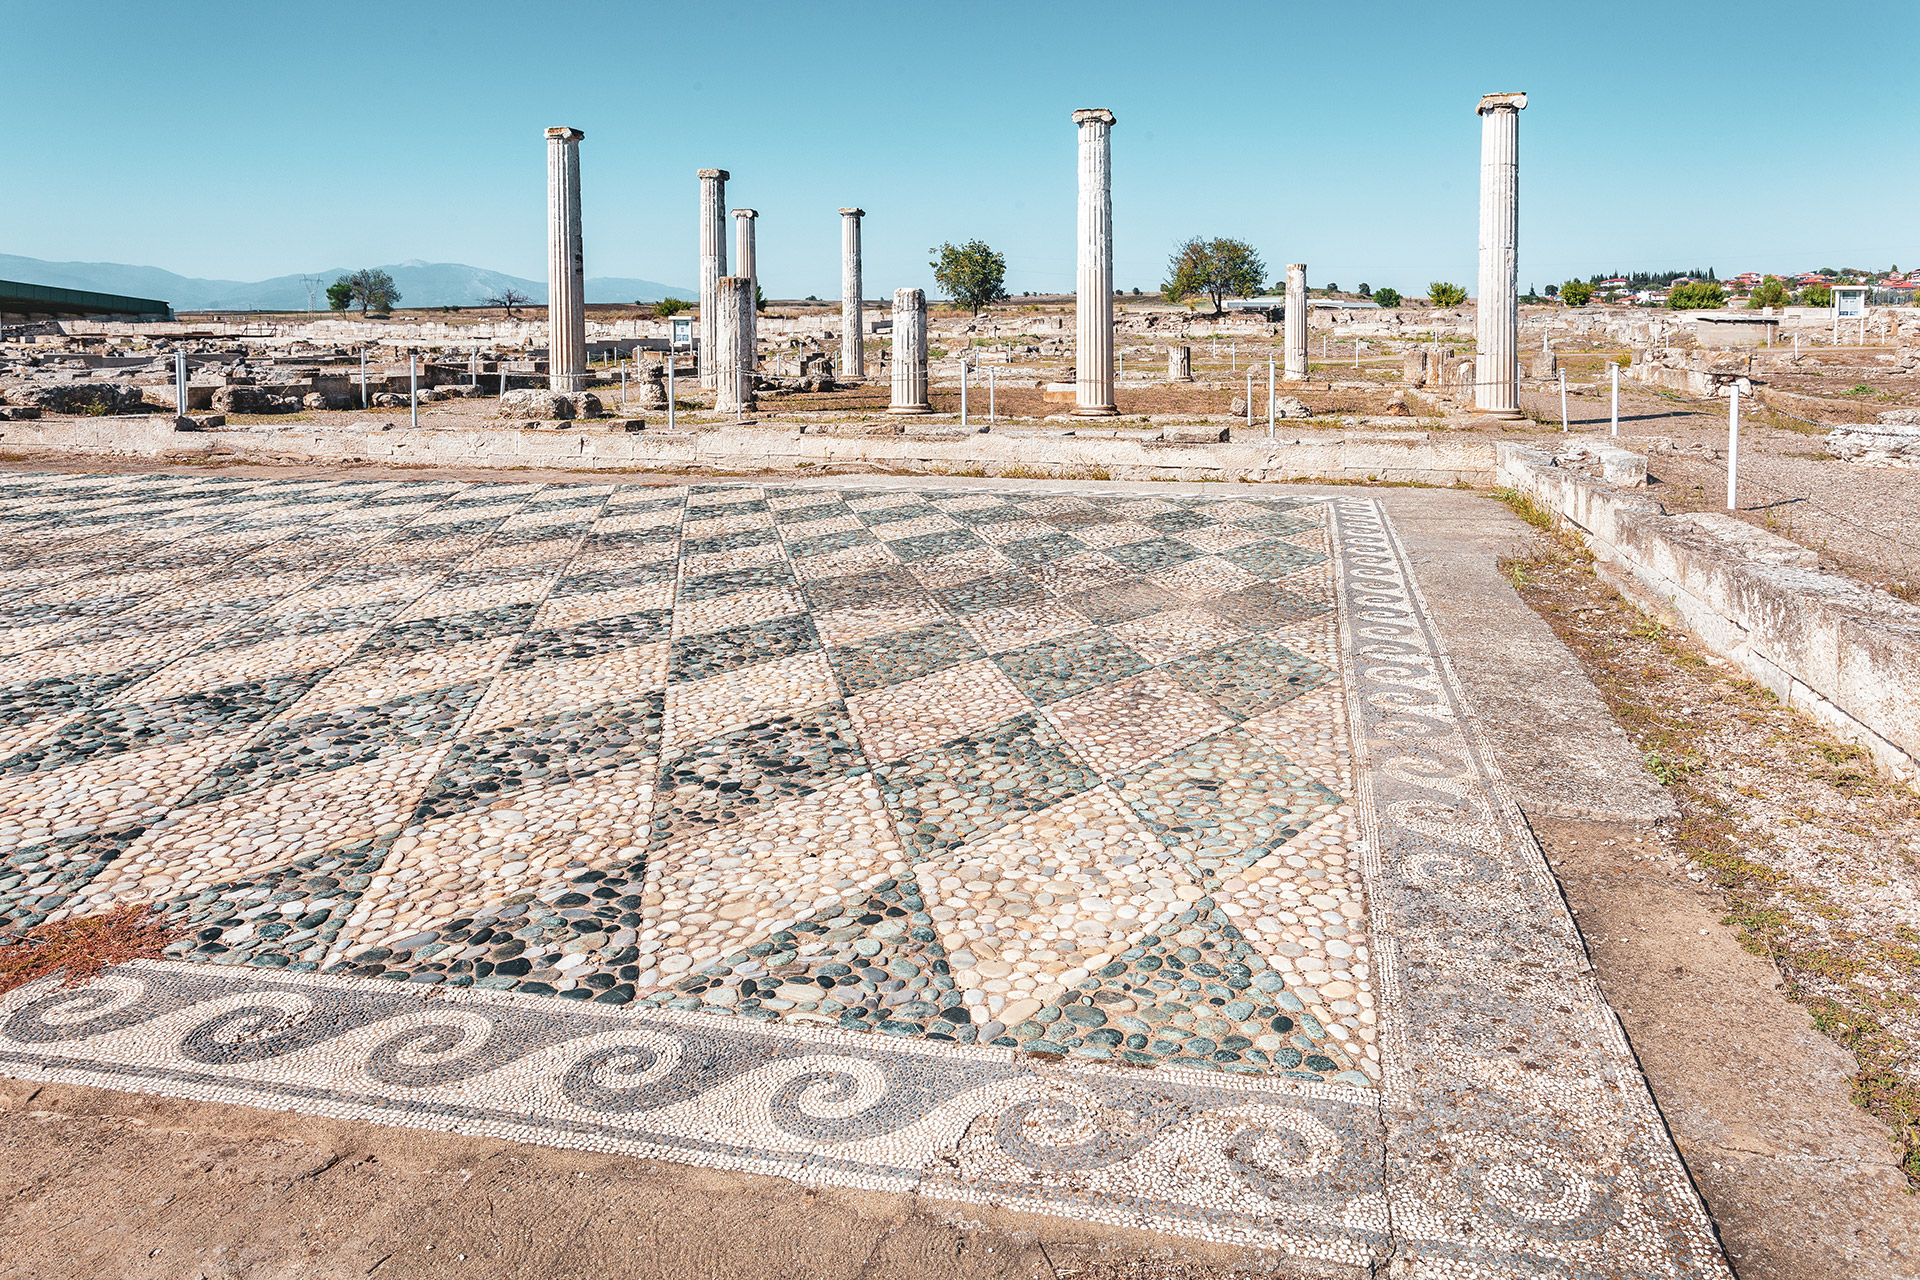 Pella - Buildings with mosaics